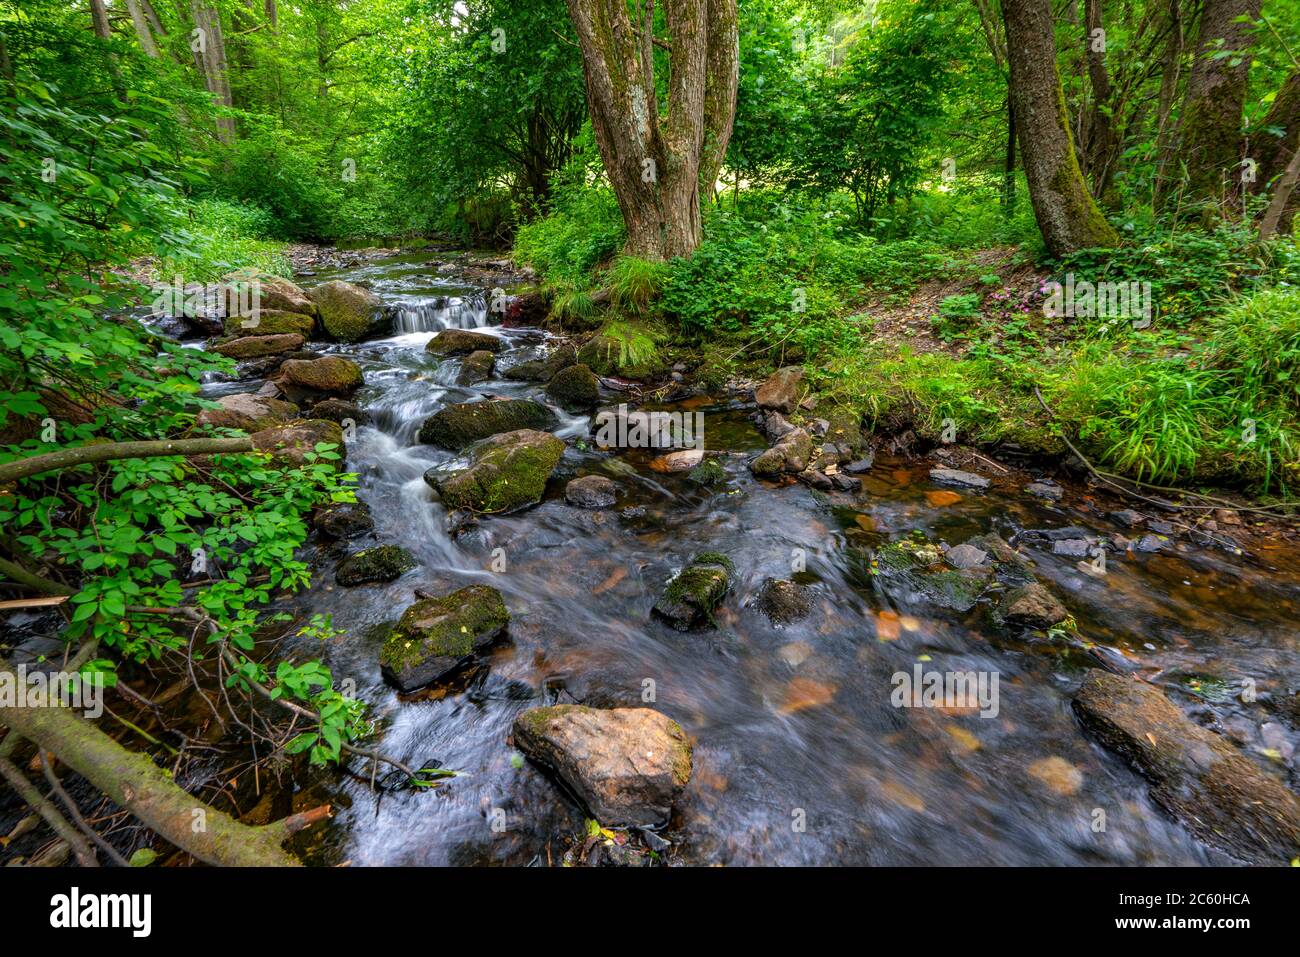 Grölisbach creek, later becomes Vichtbach, Vichtbachtal, near Roetgen, Eifel region, NRW, Germany Stock Photo